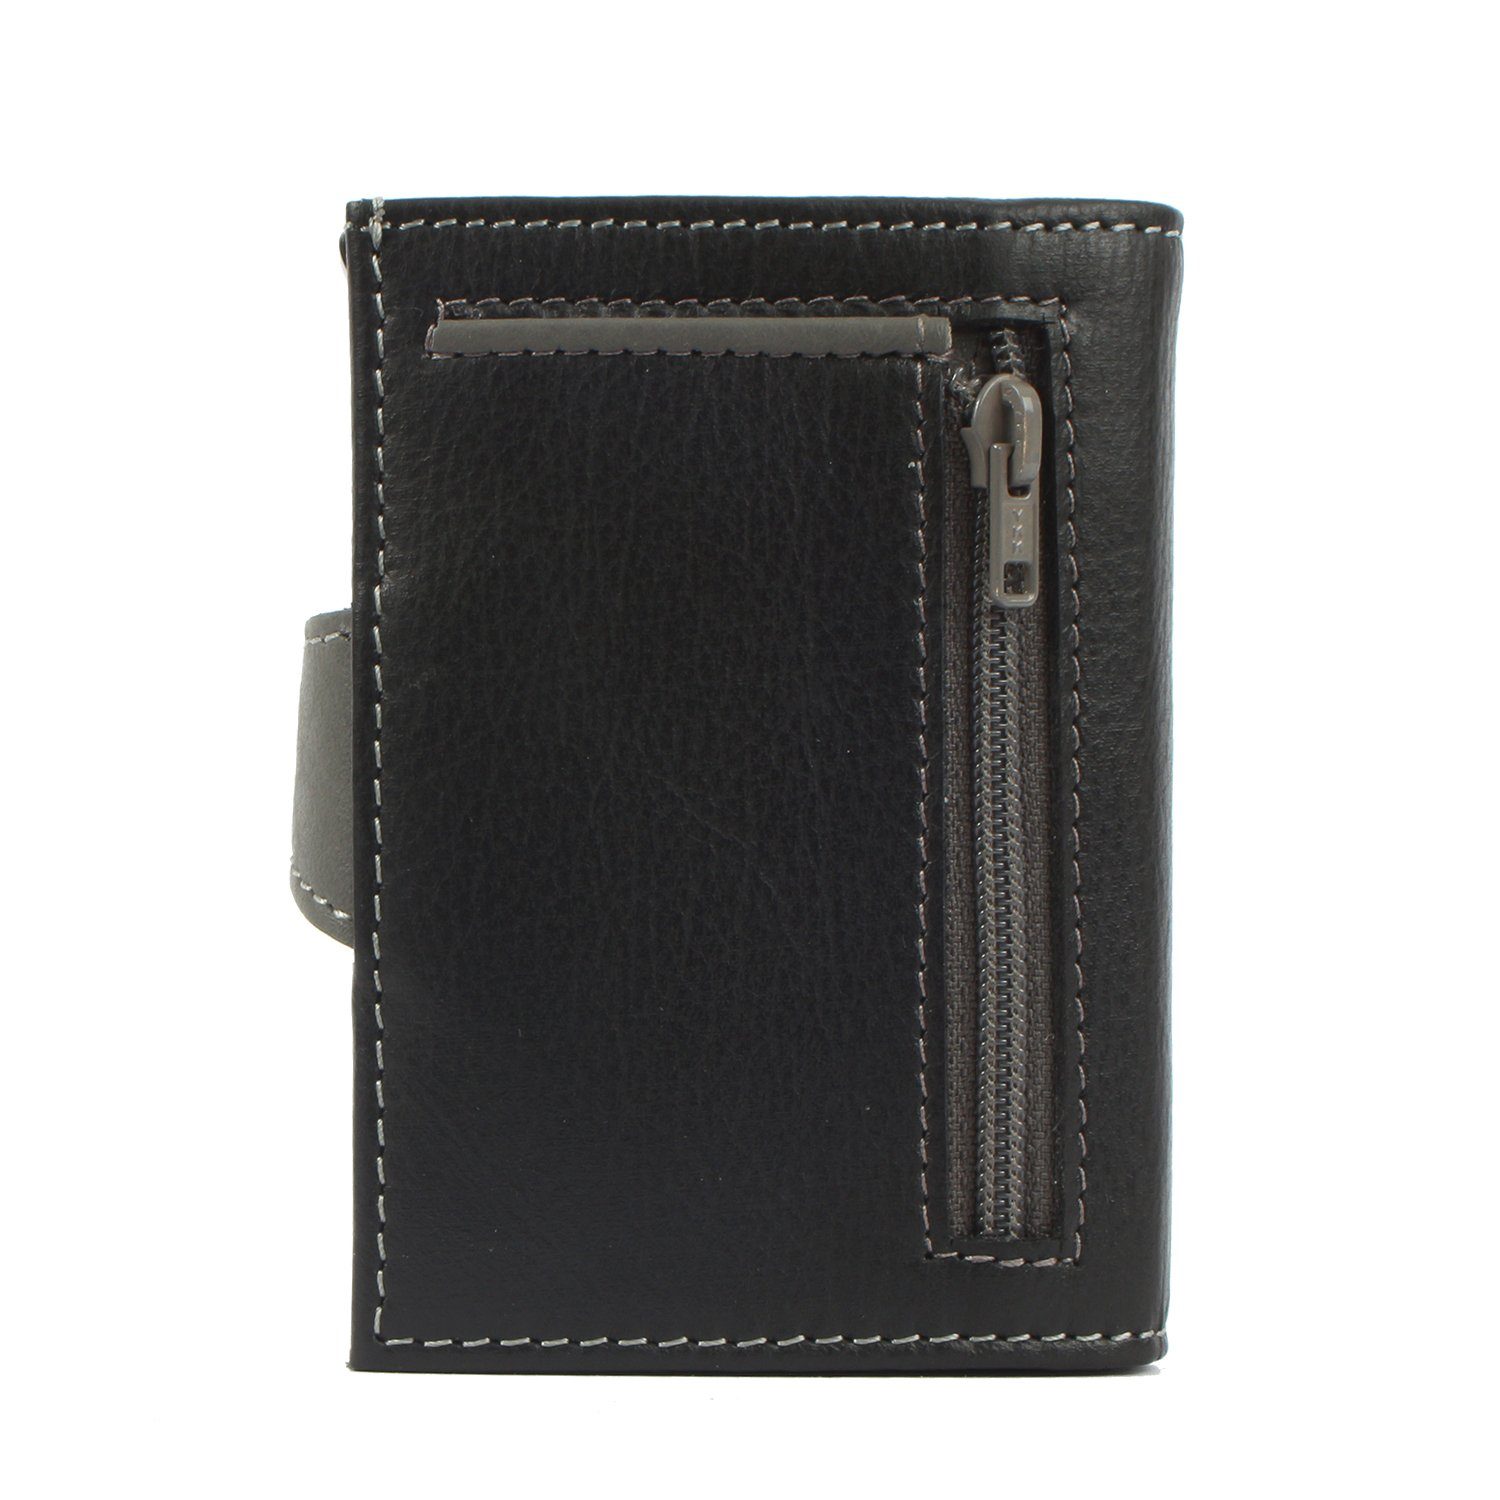 Margelisch Mini Geldbörse noonyu double aus Upcycling Leder black RFID leather, Kreditkartenbörse